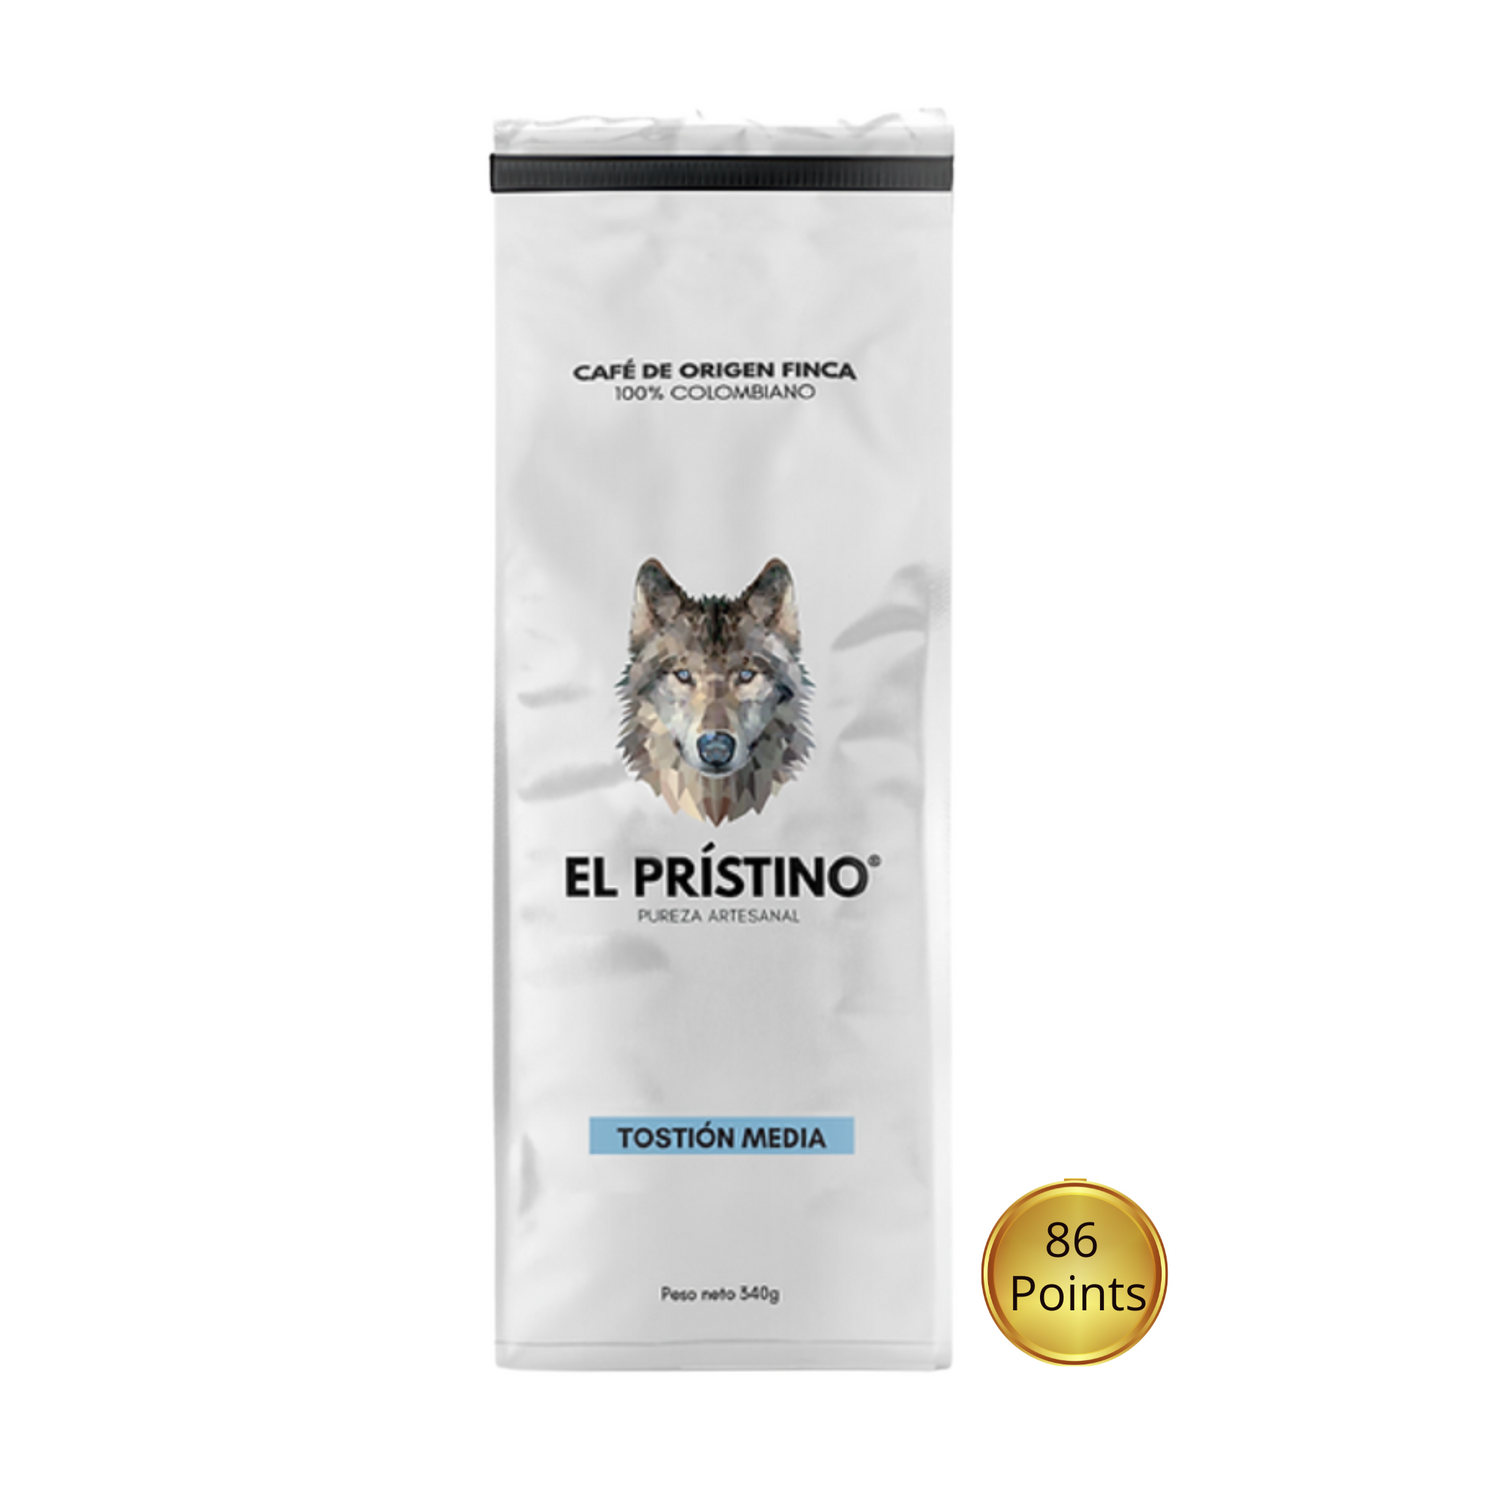 El Prístino Specialty Colombian Coffee - Medium Roast. Buy it here at Coffee Bean and Birds